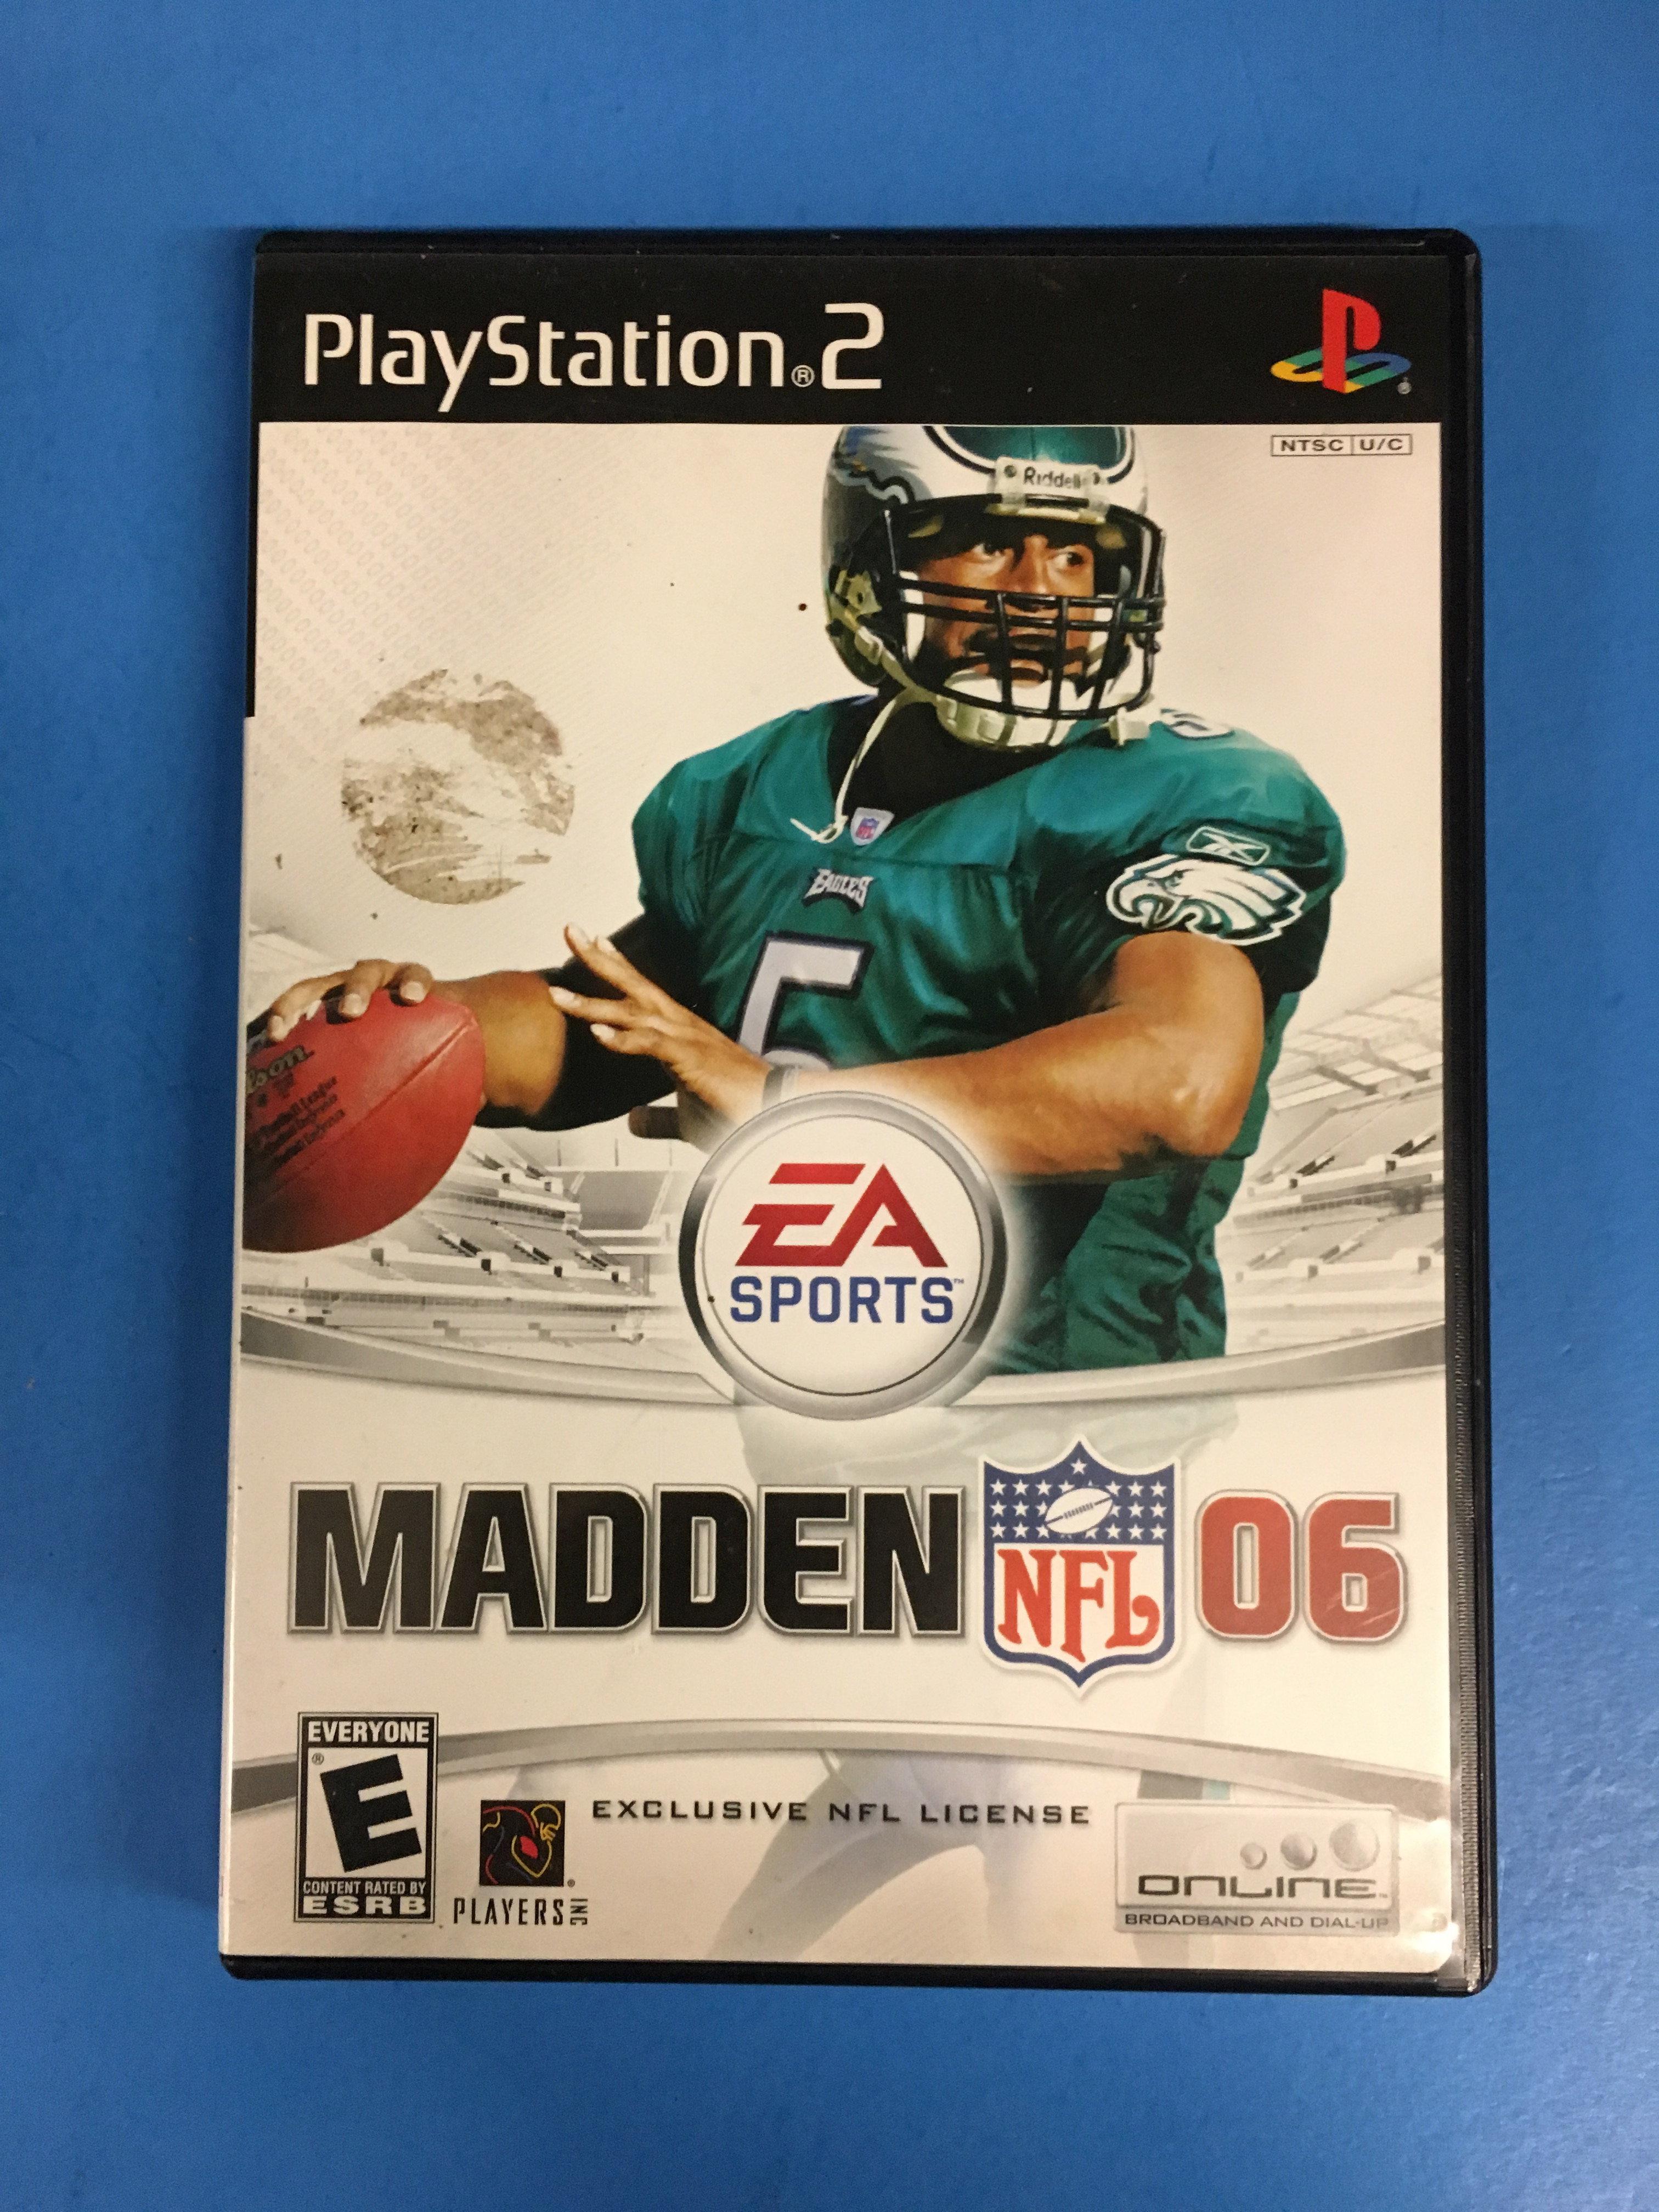 PS2 Playstation 2 Madden NFL 06 (Donovan McNabb) Video Game